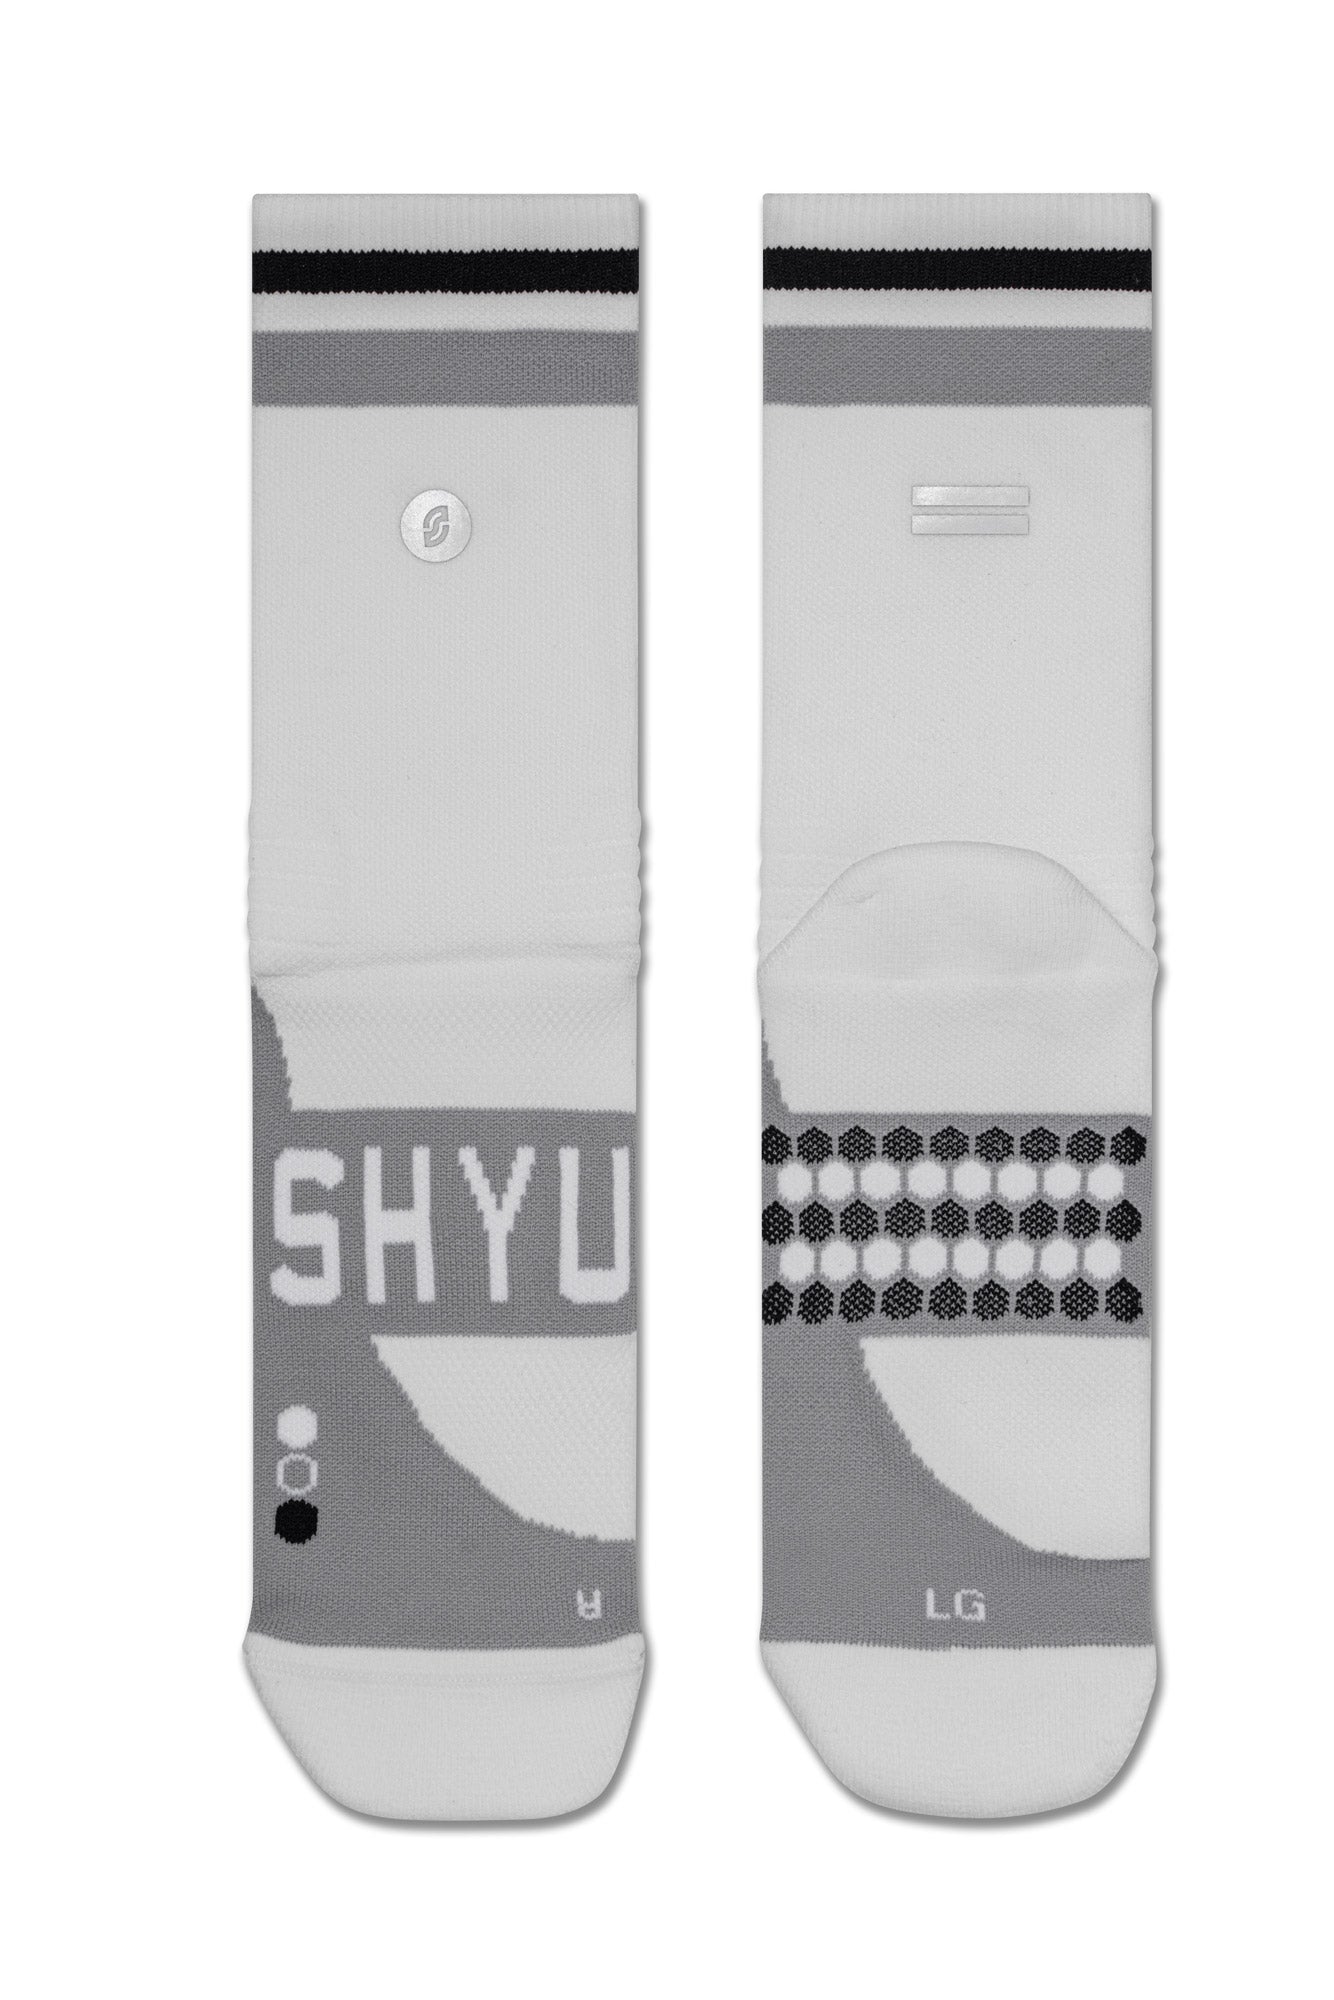 SHYU racing socks - white | grey | black